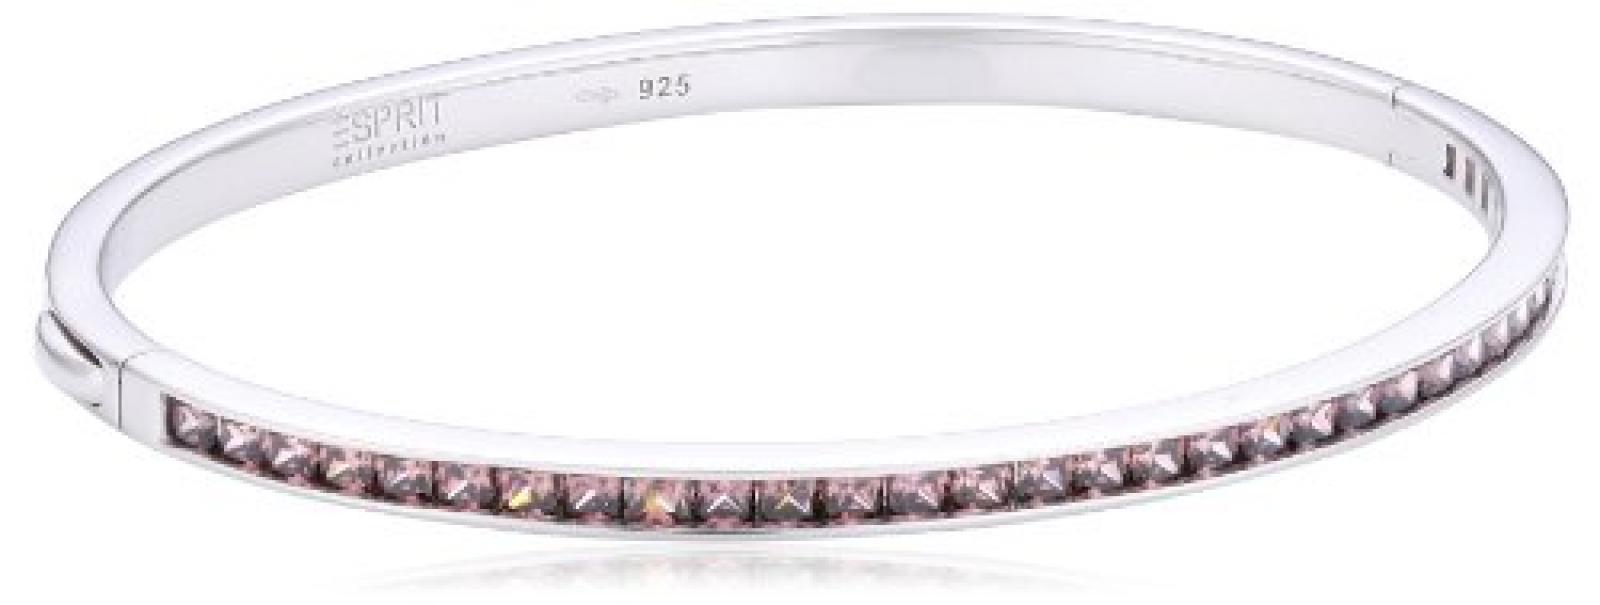 Esprit Collection Damen-Armreif 925 Sterling Silber rhodiniert Glas Zirkonia perseus angular berry pink ELBA91038E600 